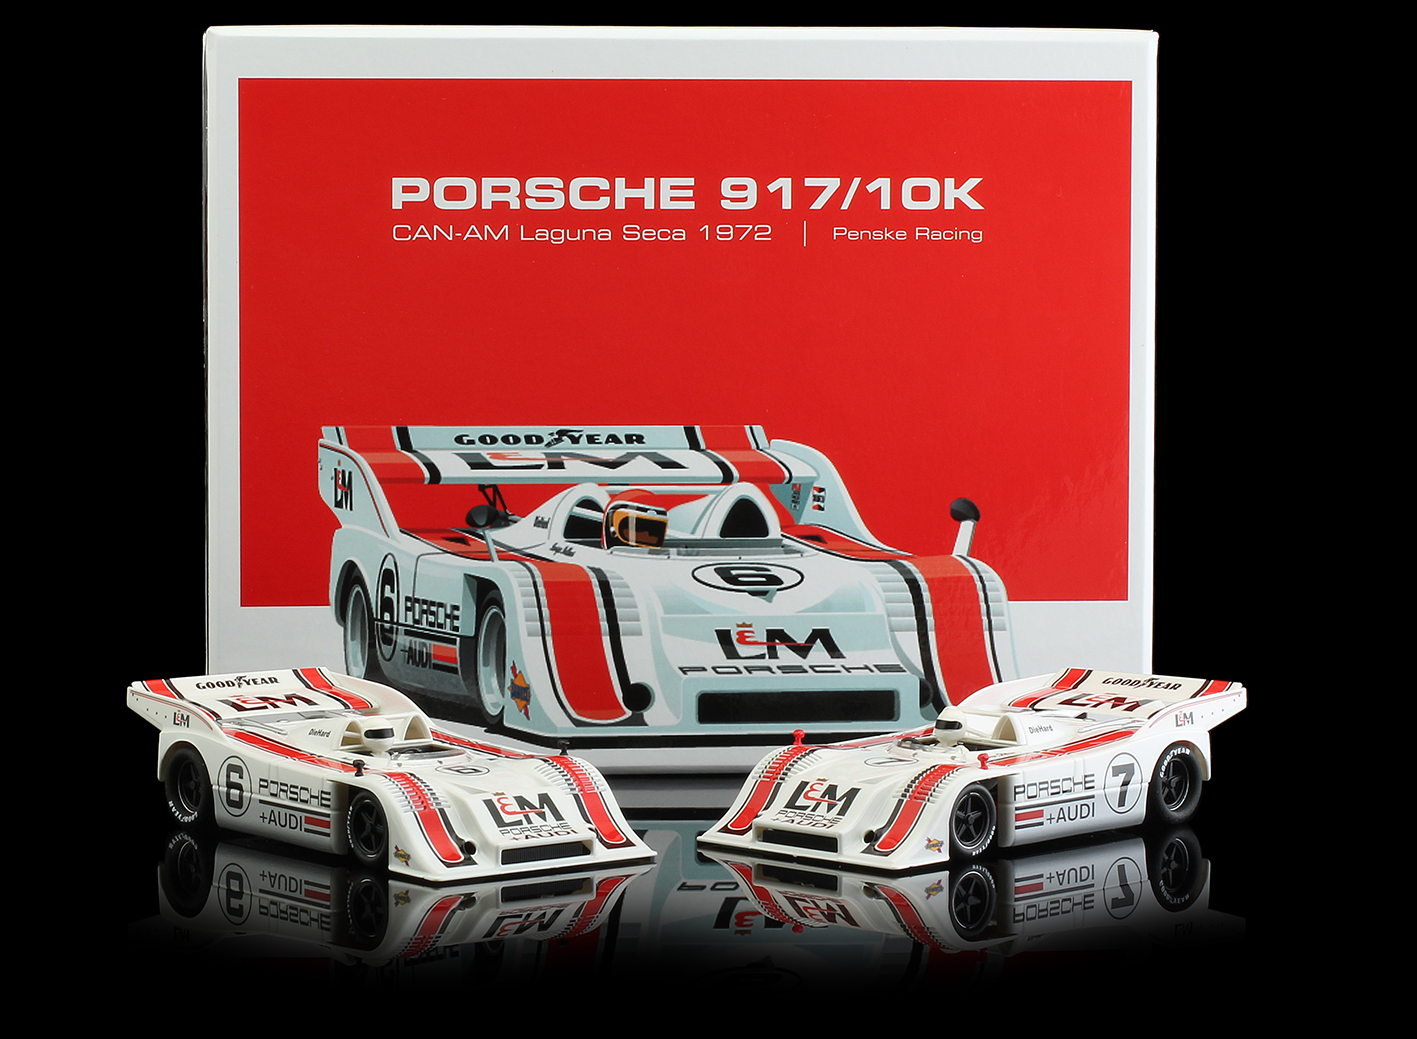 nsr-set12-1-Porsche-917-10K-Can-Am-Champion-Set-Laguna-Seca-1972-Mark-Donohue-George-Follmer-Penske-Racing